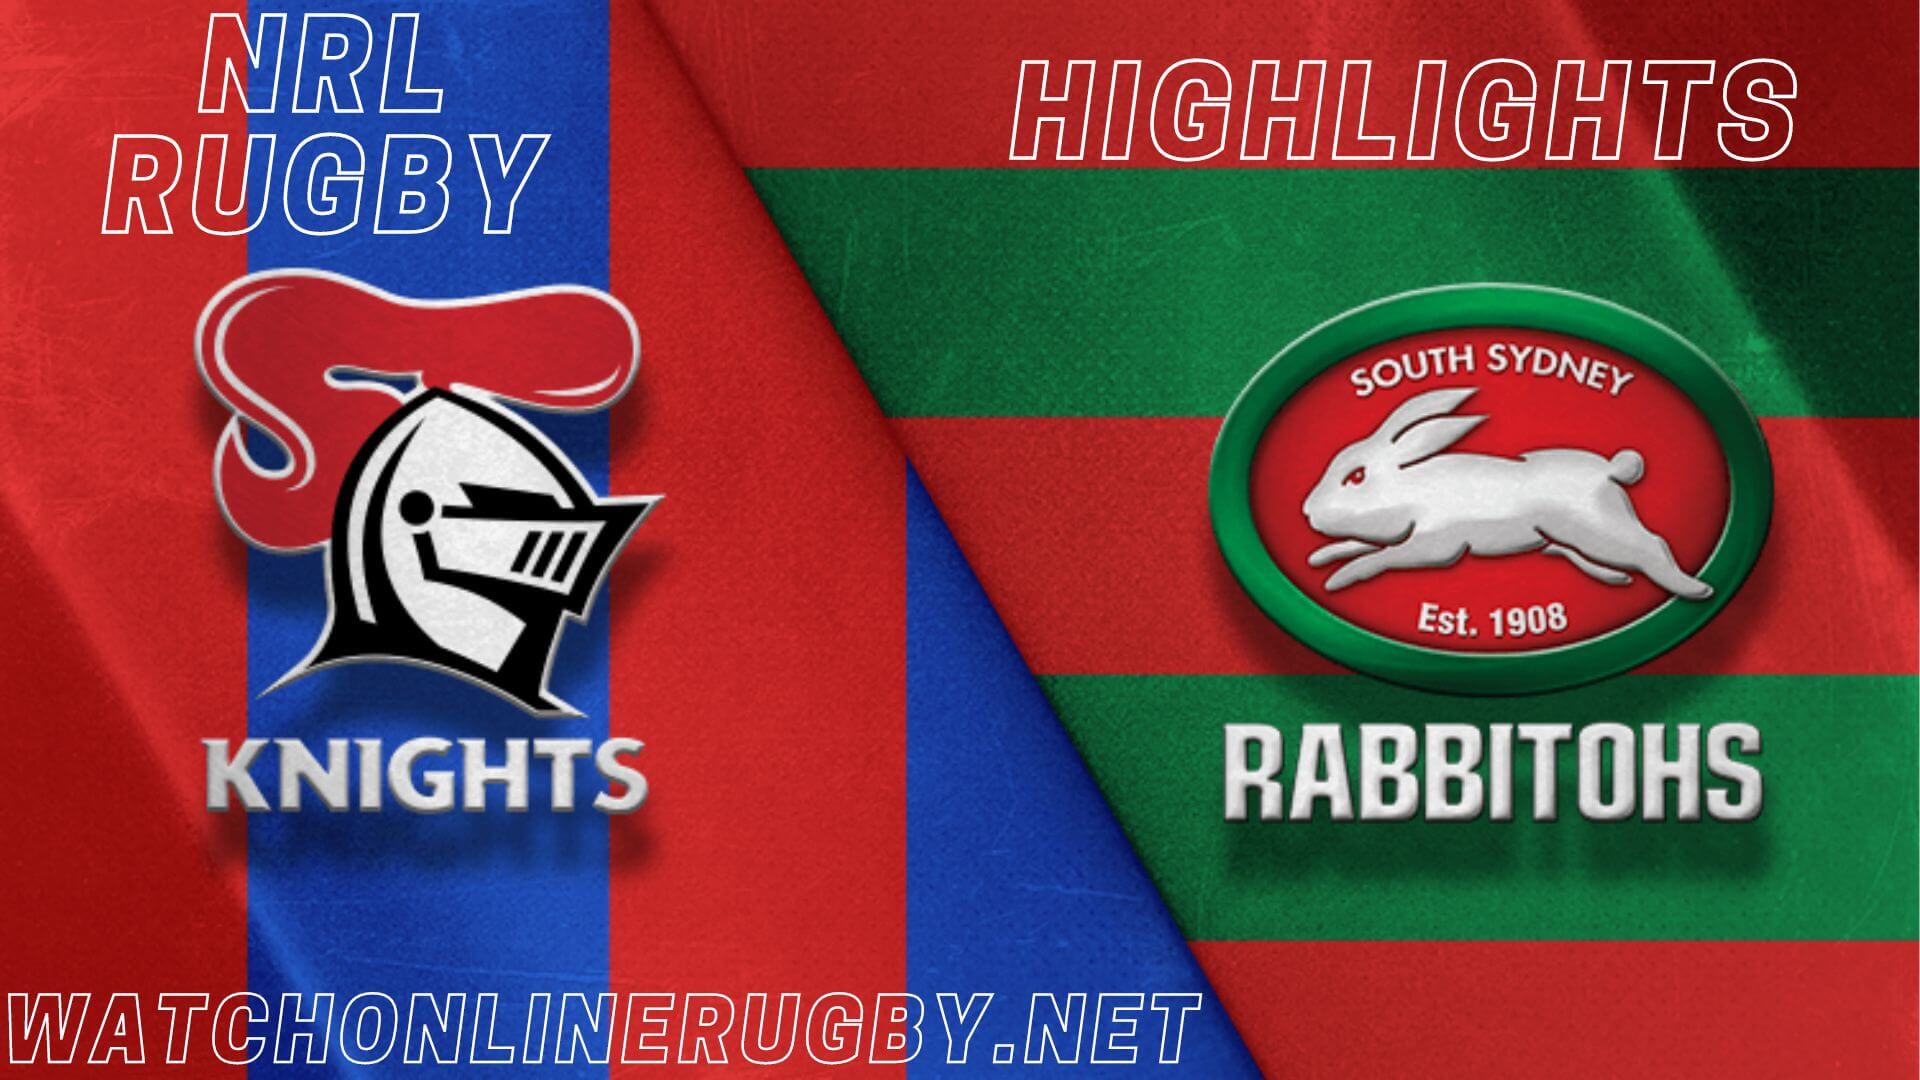 Knights Vs Rabbitohs Highlights RD 17 NRL Rugby